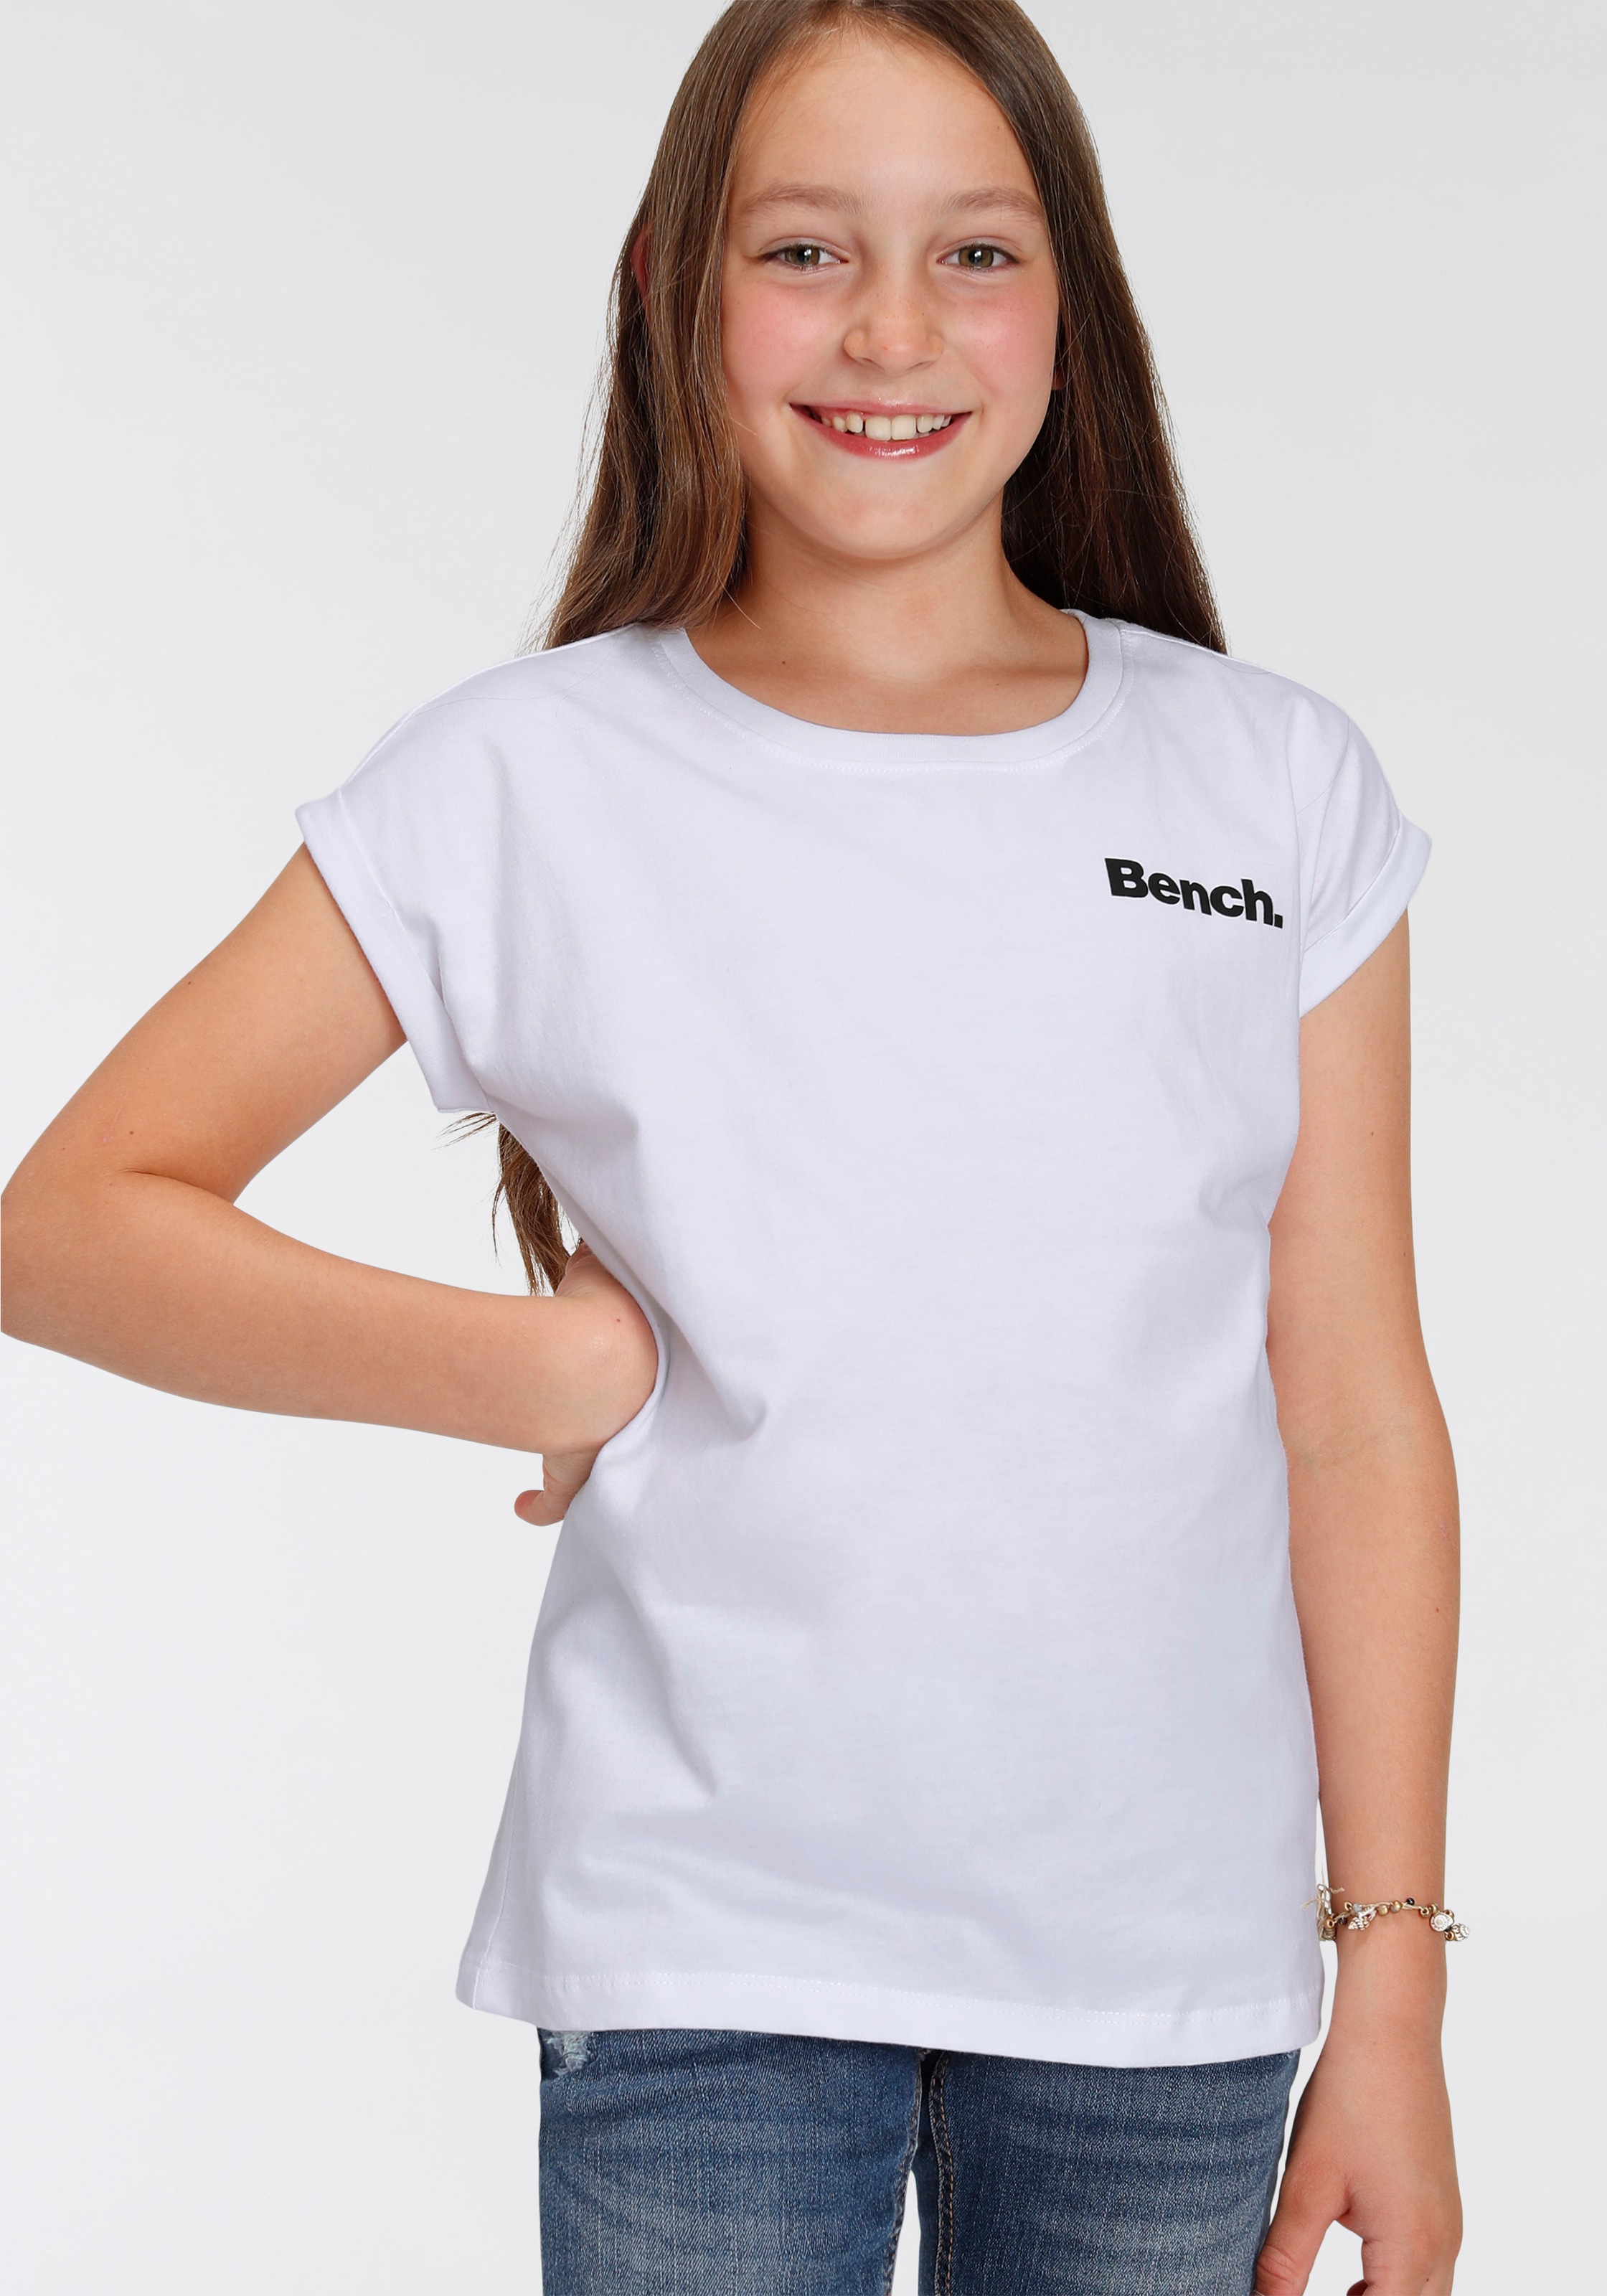 Bench. T-Shirt, mit Logo bei ♕ Rückendruck